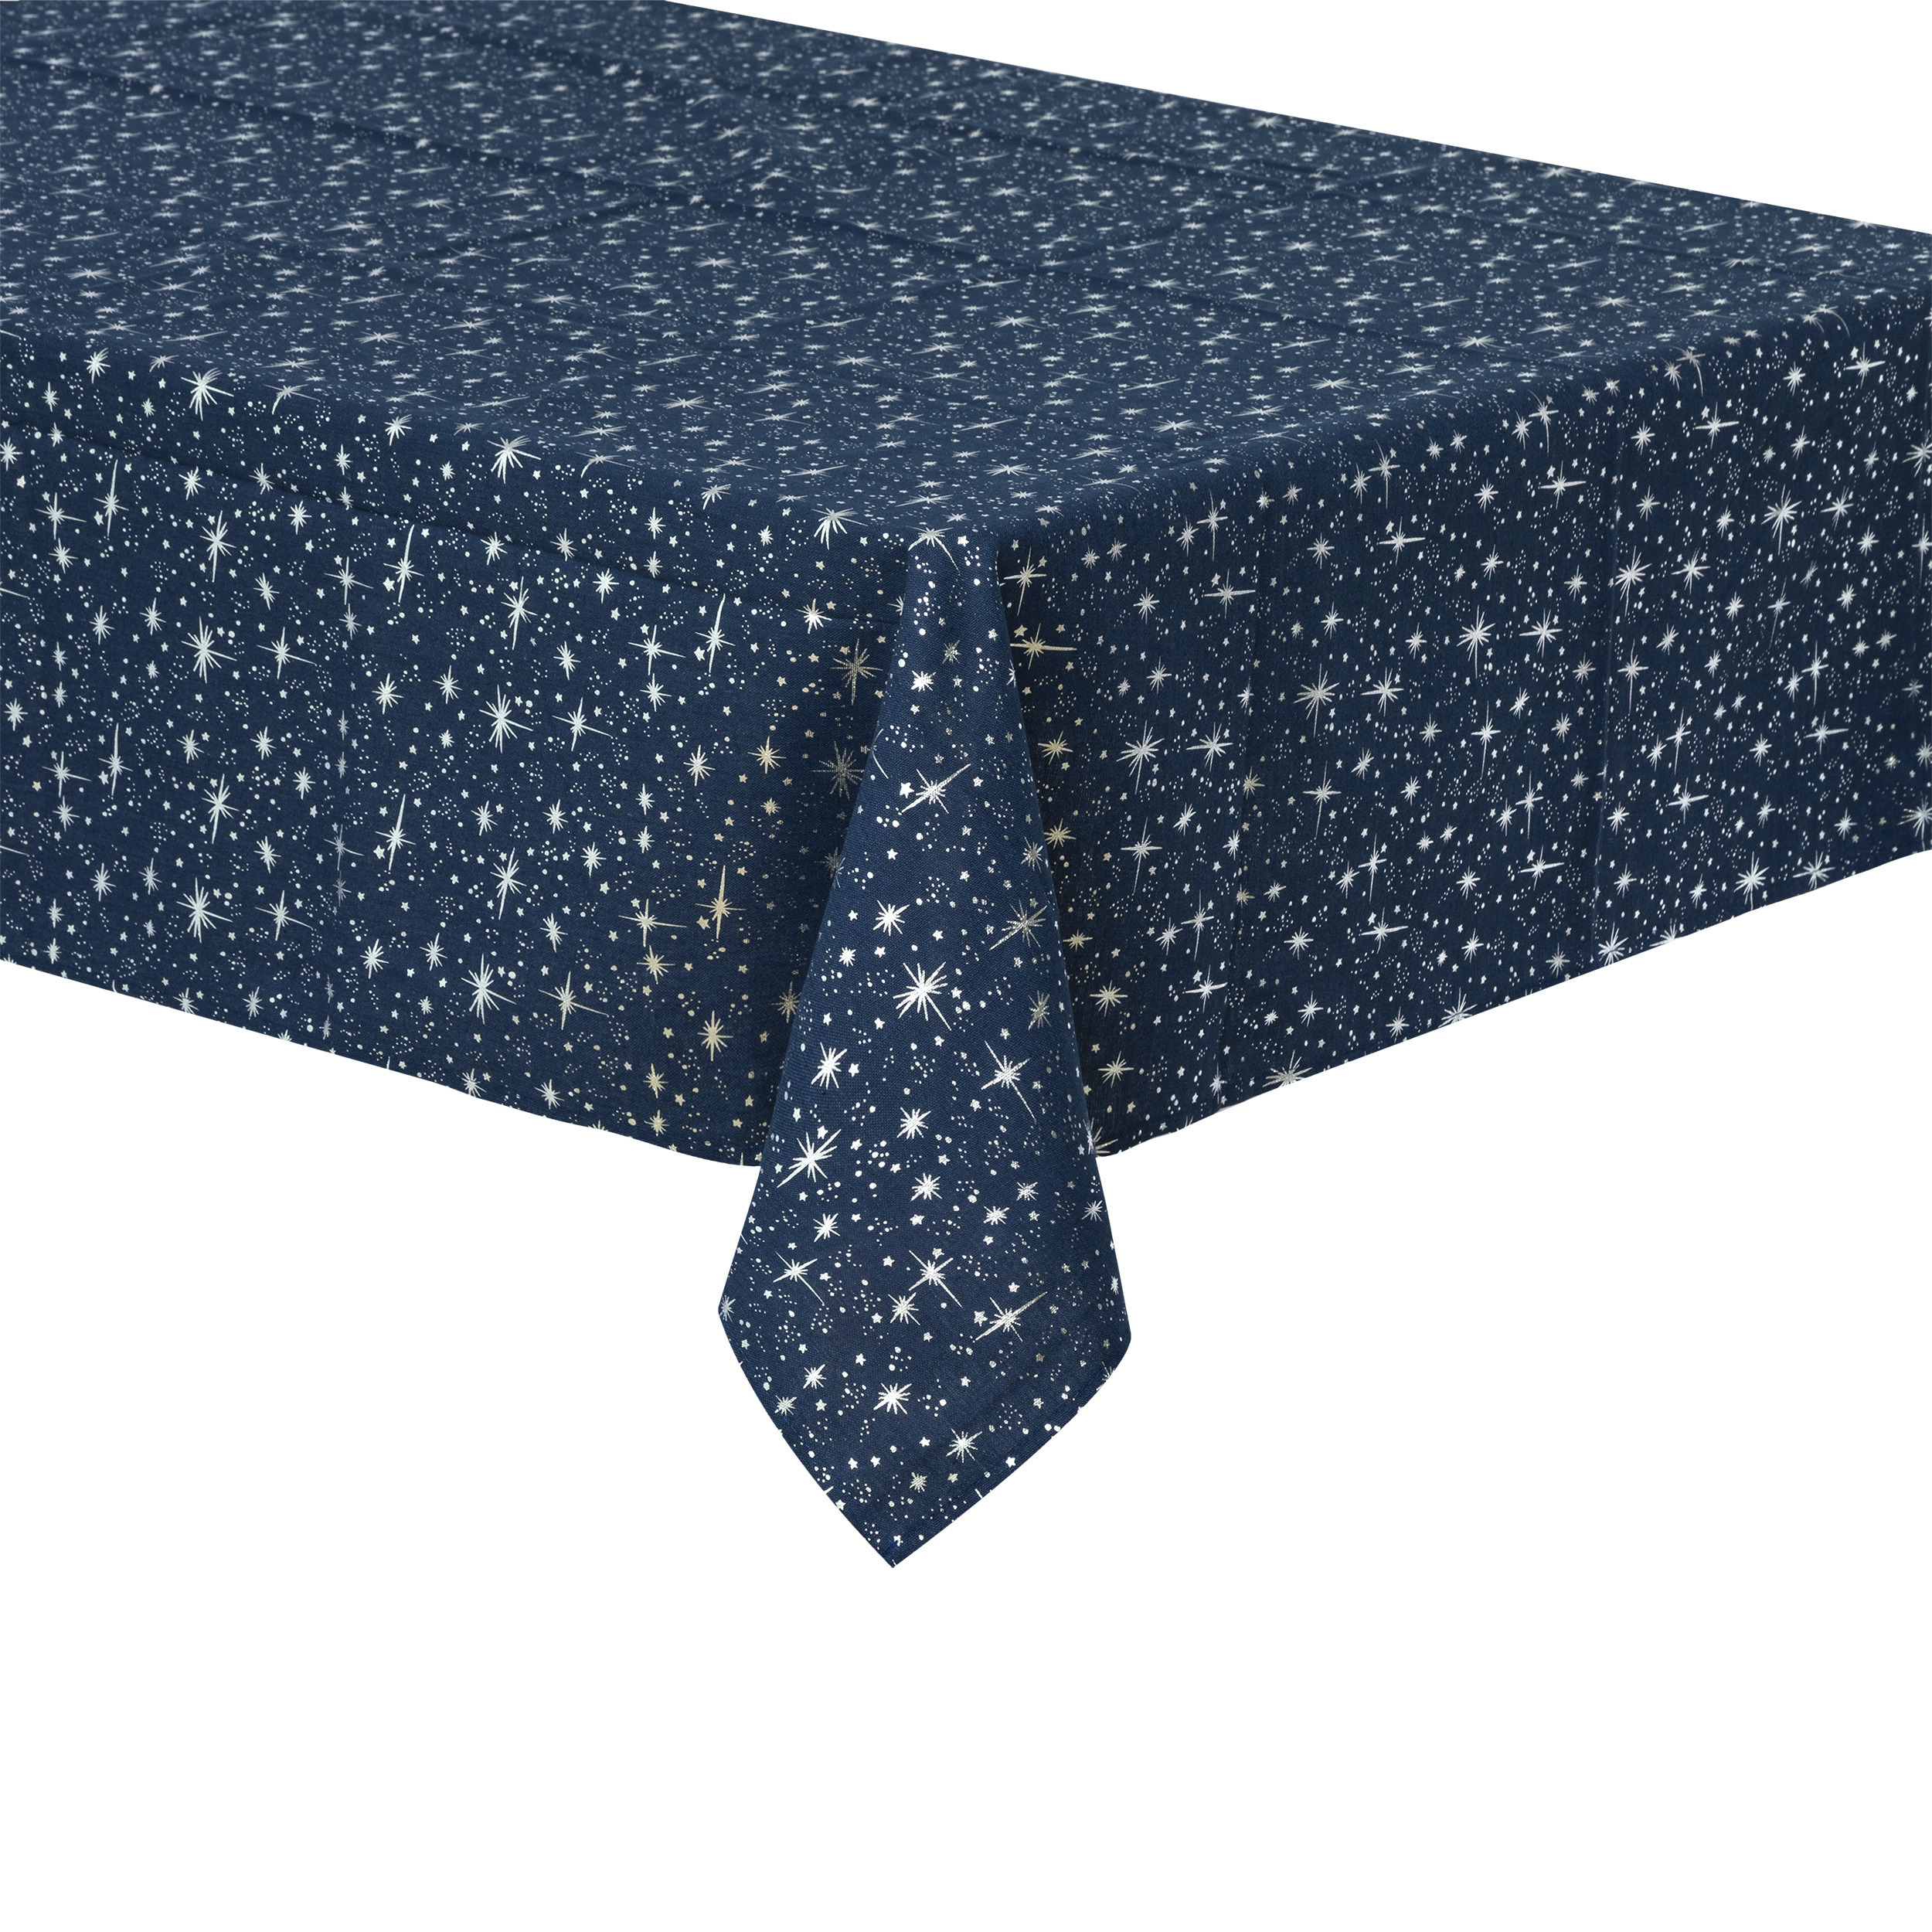 Tafelkleed-tafellaken blauw sterrenhemel van polyester-katoen formaat 140 x 240 cm